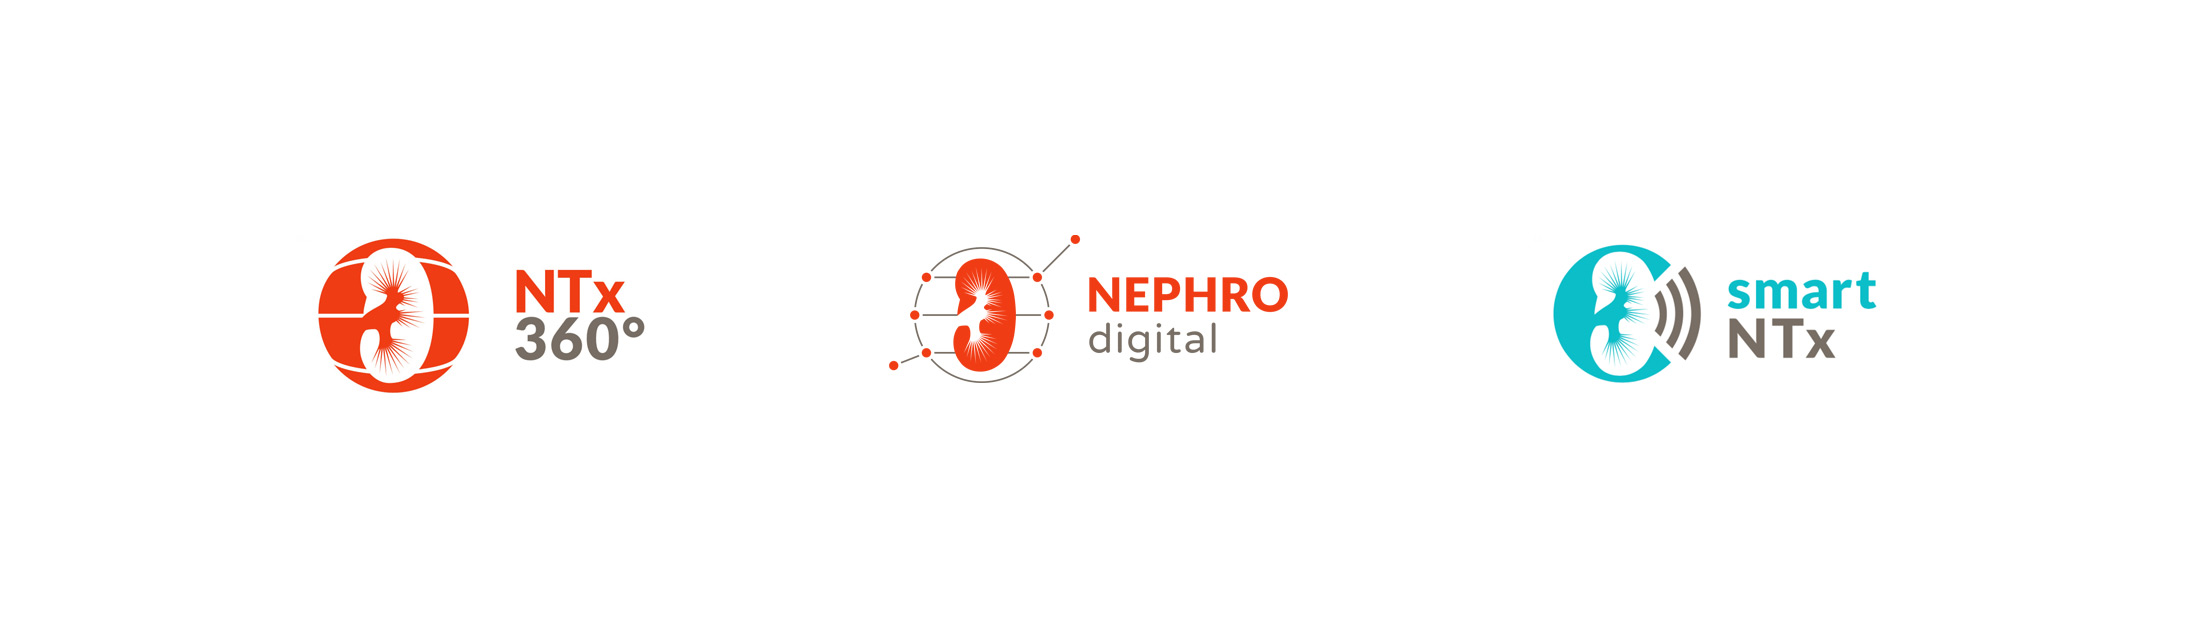 Logos NTx360°, NephroDigital und smartNTx